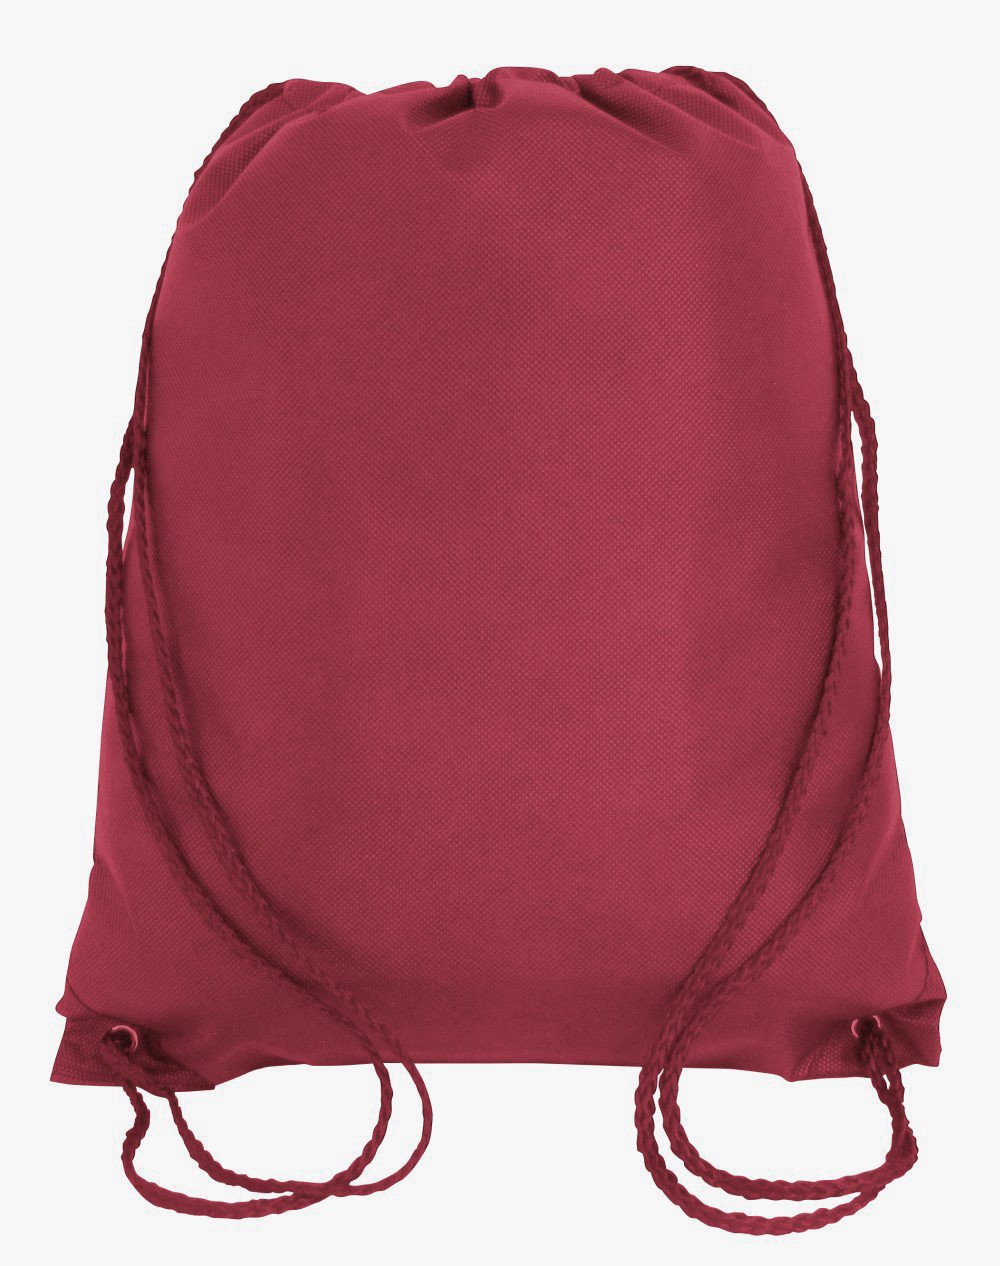 Generic Drawstring Bag Waterproof Drawstring Sport Bag Unisex